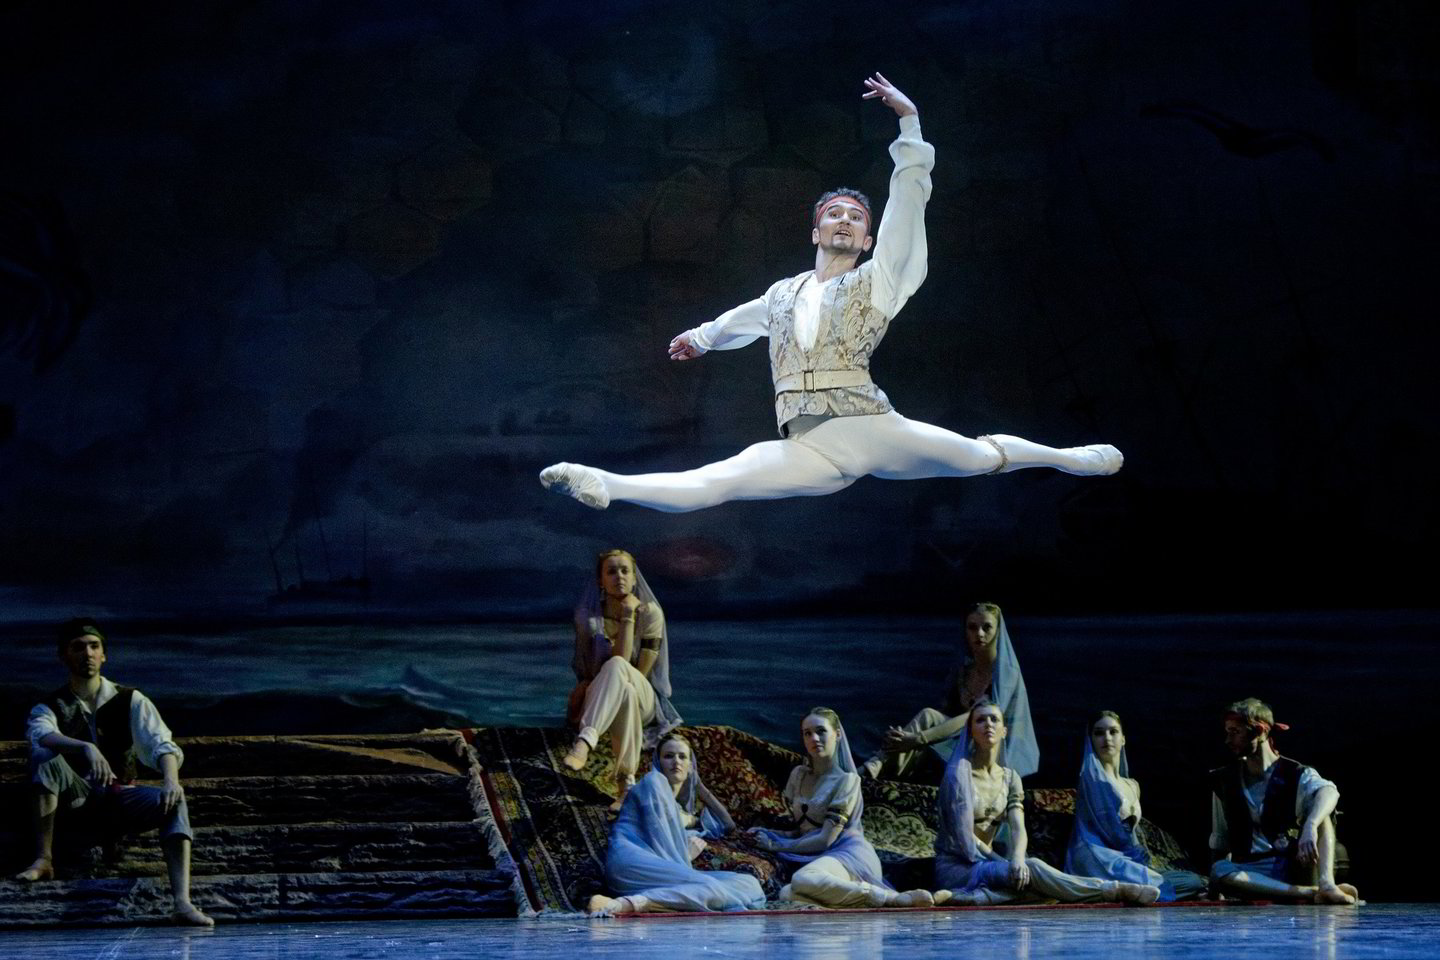  Scena iš baleto  „Korsaras“. G.Žukovskis - Konradas.<br> M.Aleksos nuotr.